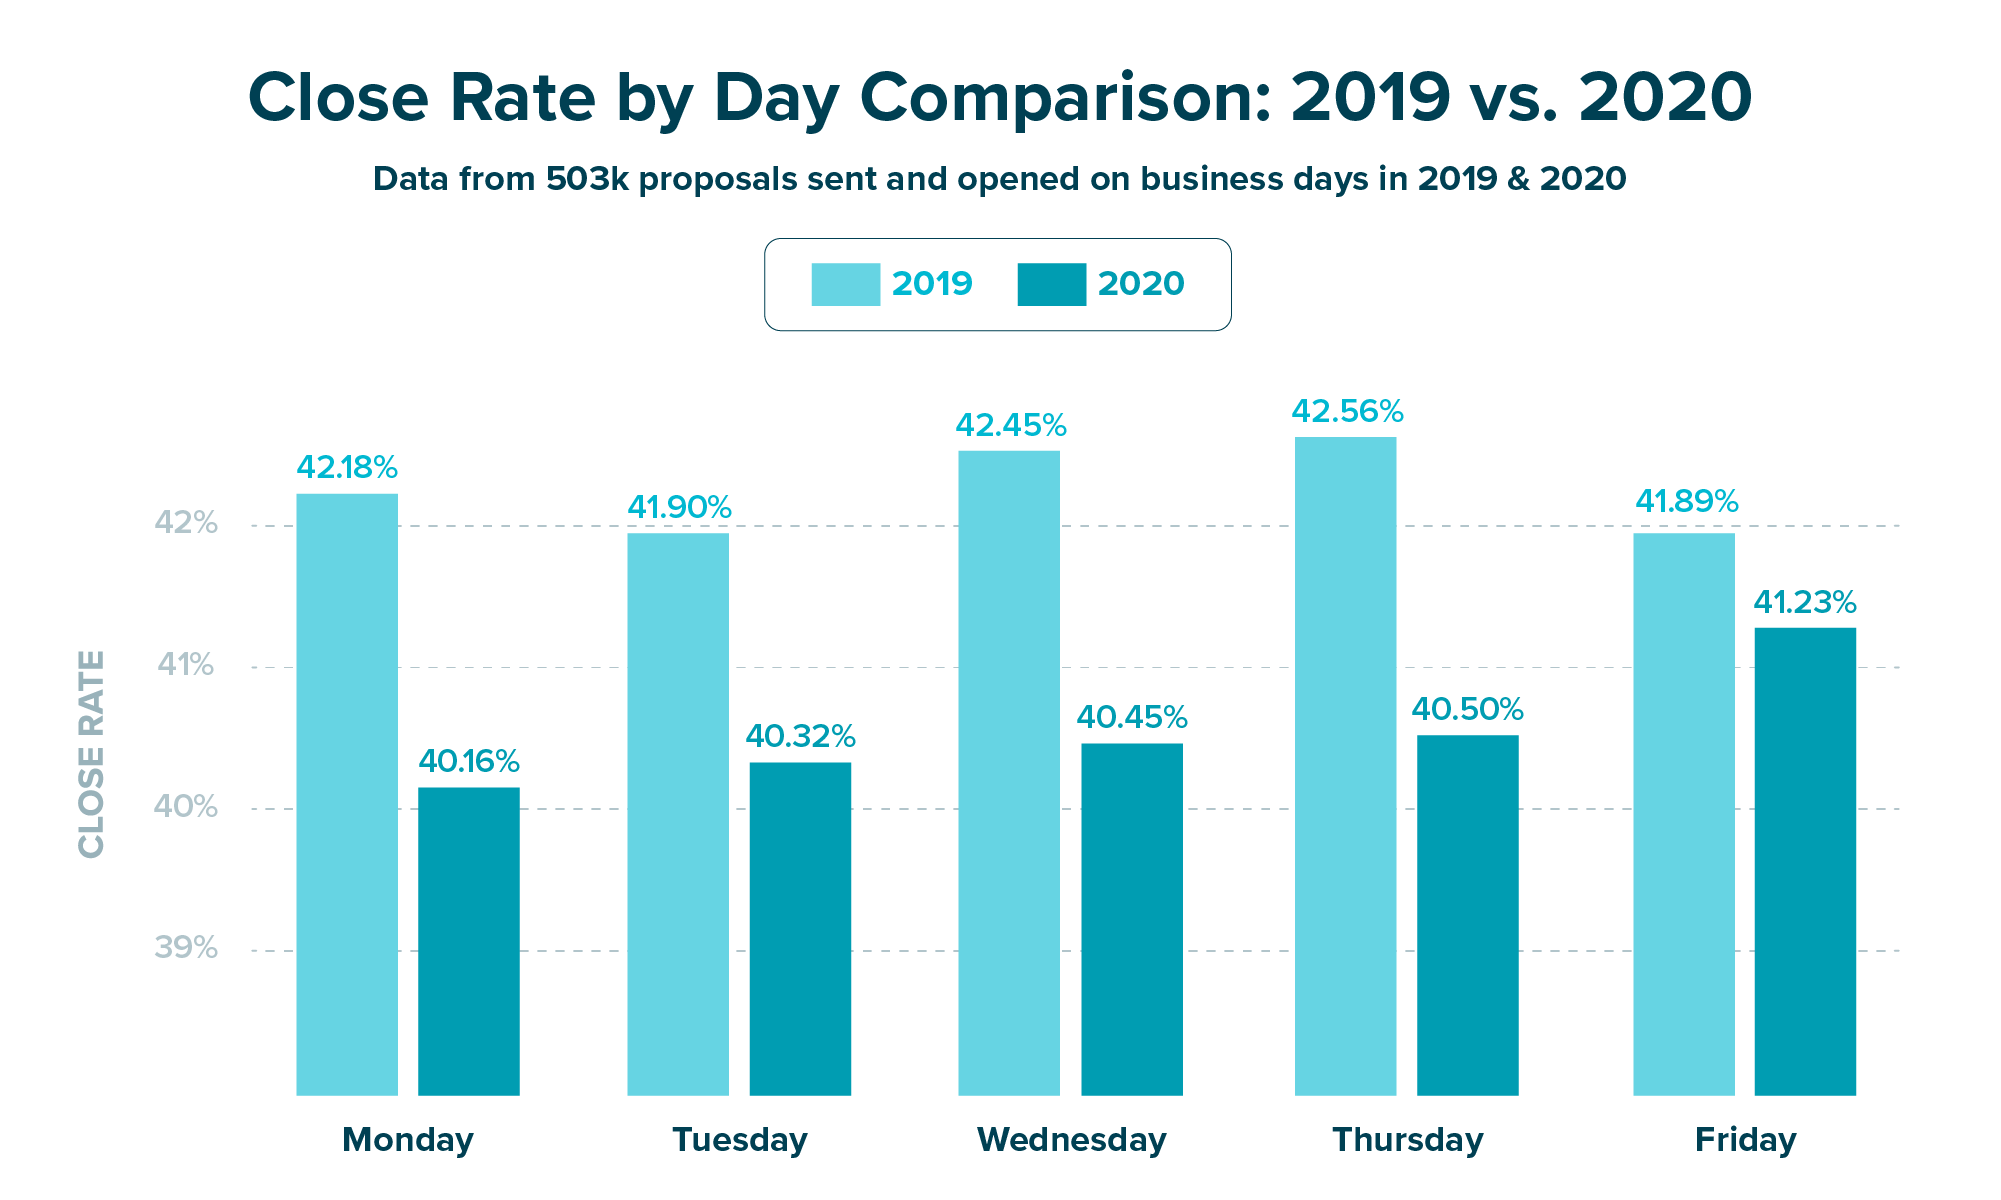 Close Rate by Day Comparison: 2019 vs. 2020